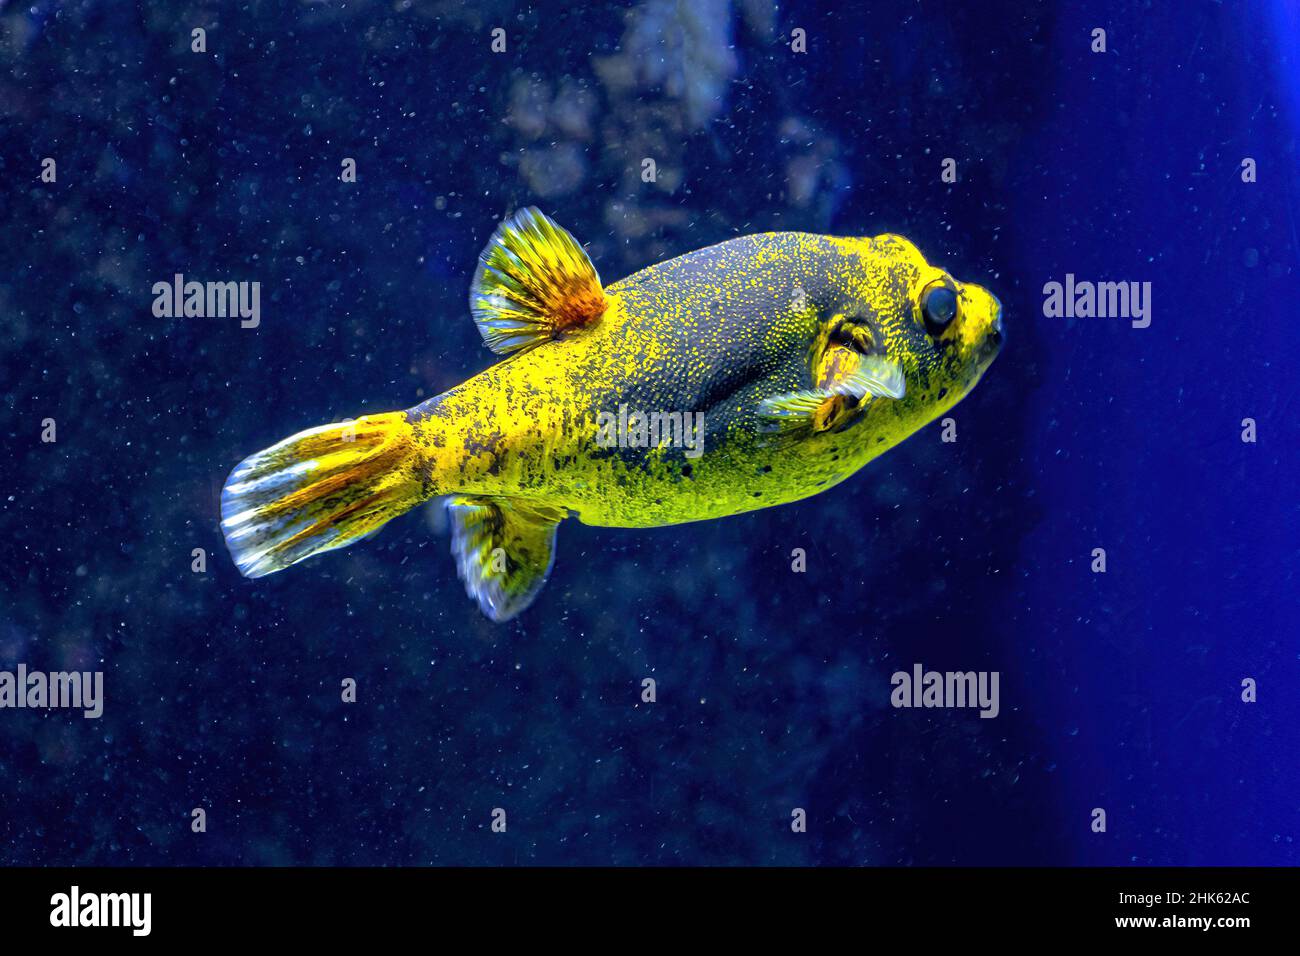 https://c8.alamy.com/comp/2HK62AC/blackspotted-puffer-or-dog-faced-puffer-fish-in-aquarium-arothron-nigropunctatus-species-of-family-tetraodontidae-living-in-indian-ocean-and-the-2HK62AC.jpg